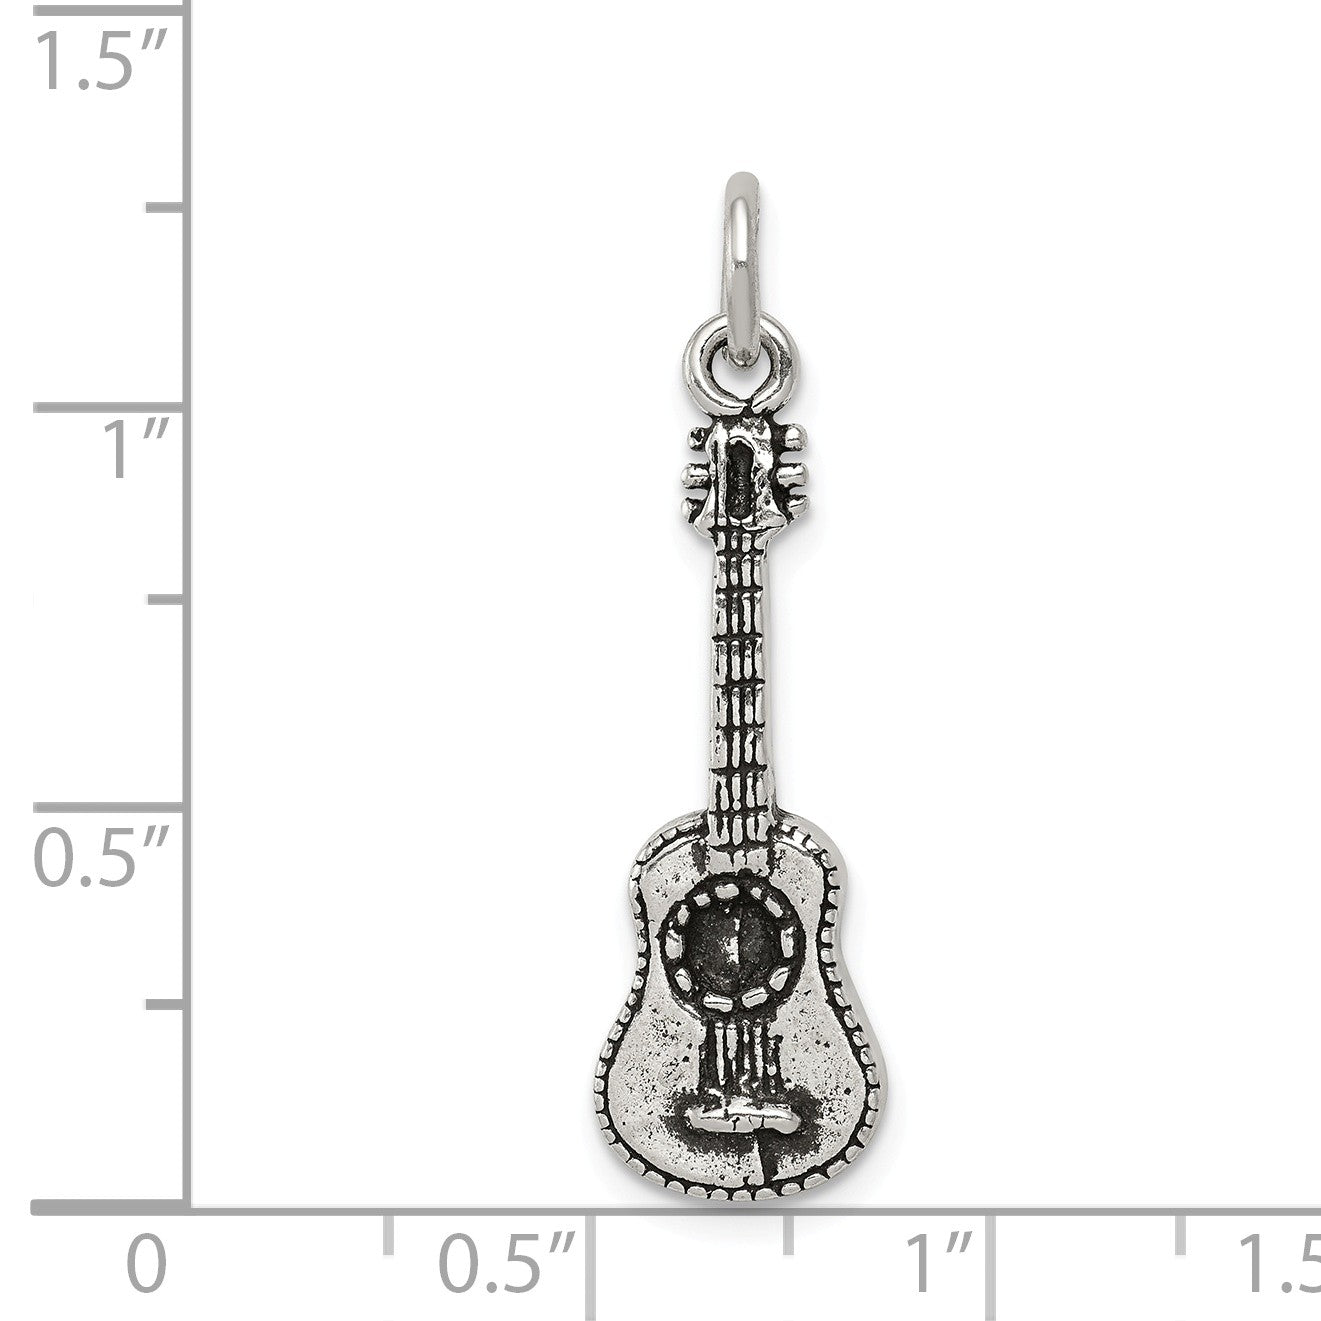 Guitar String Cross Necklace - Rock N Roll Jewelry